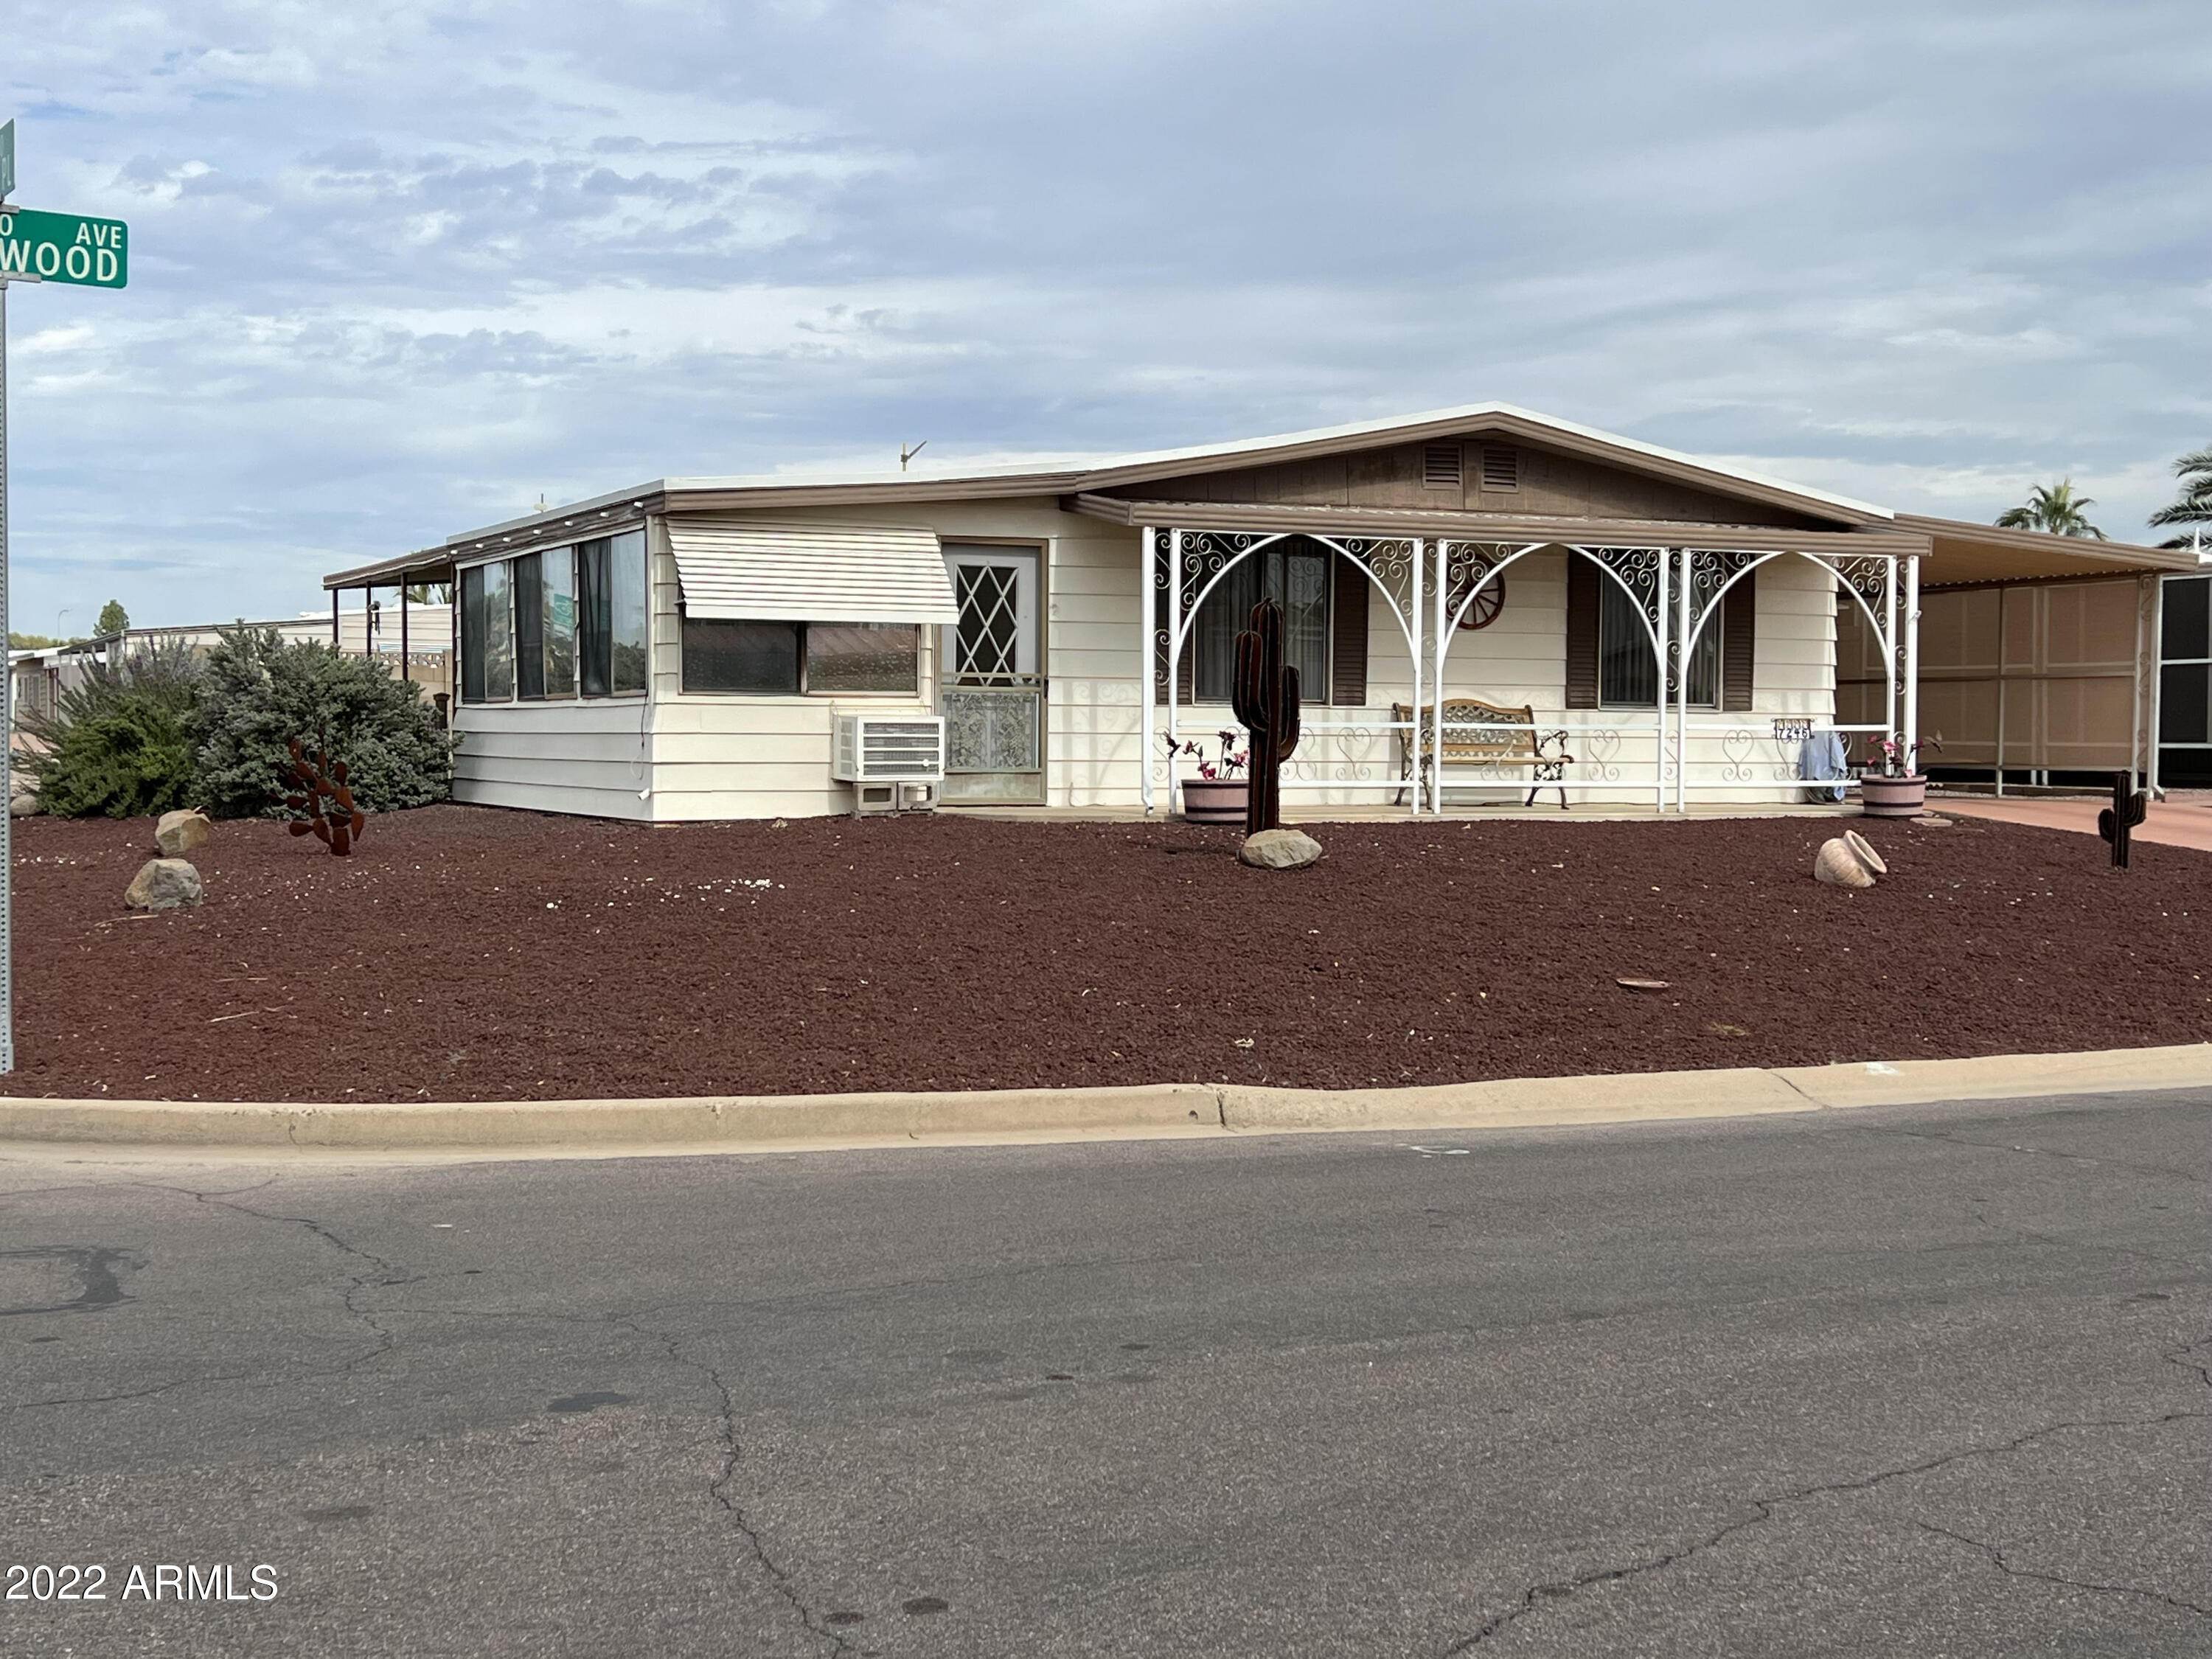 4. Mobile Home for Sale at Mesa, AZ 85208